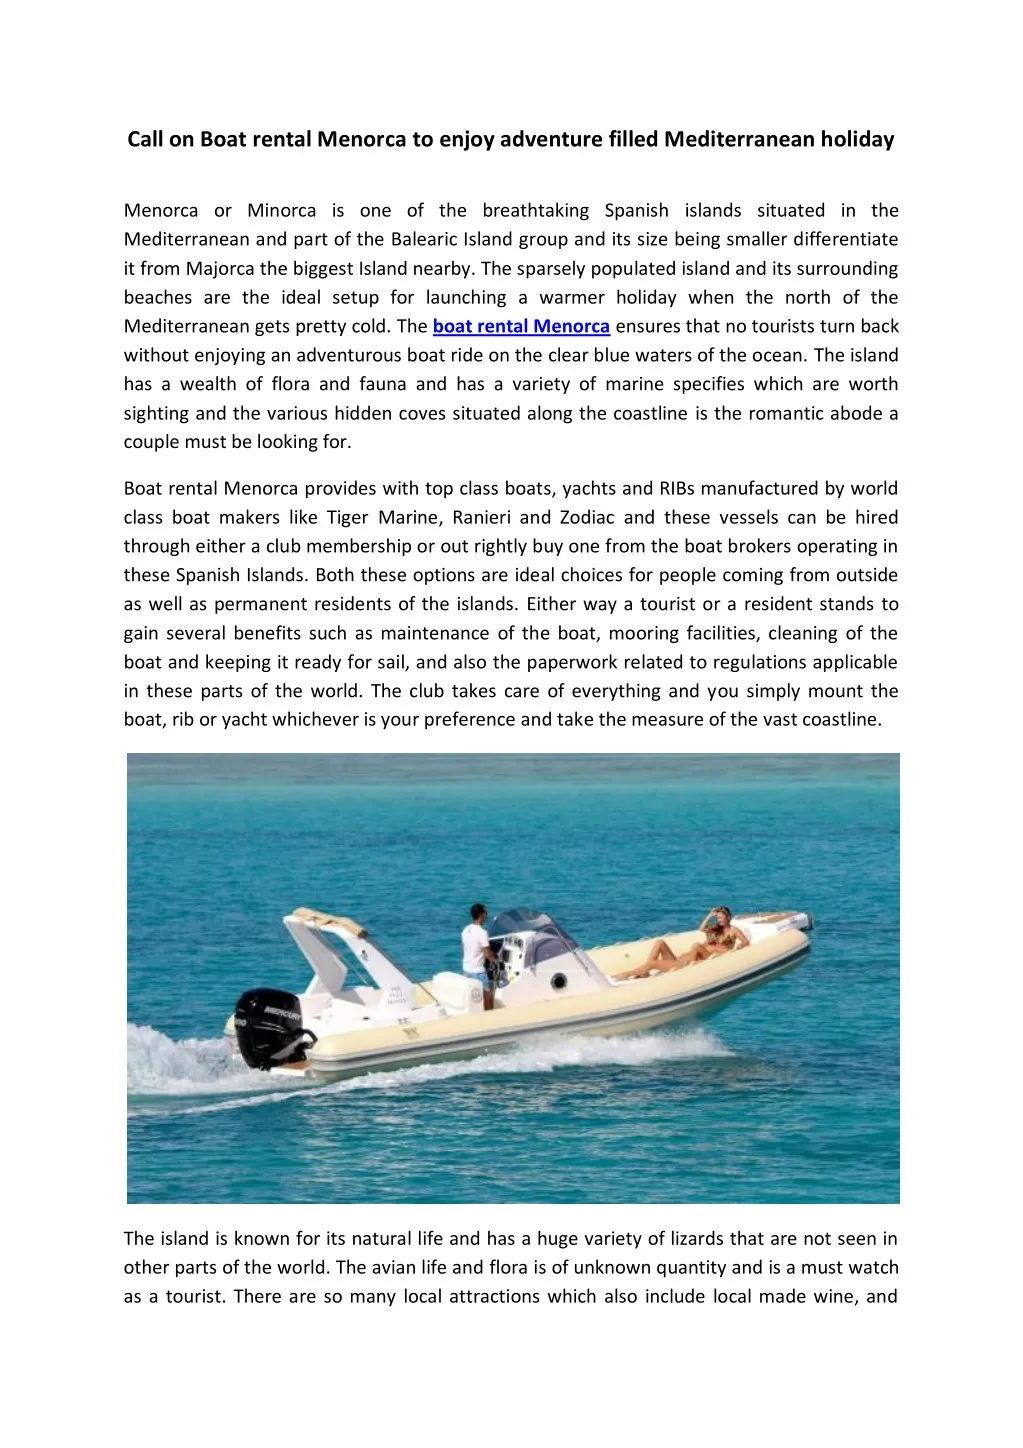 call on boat rental menorca to enjoy adventure